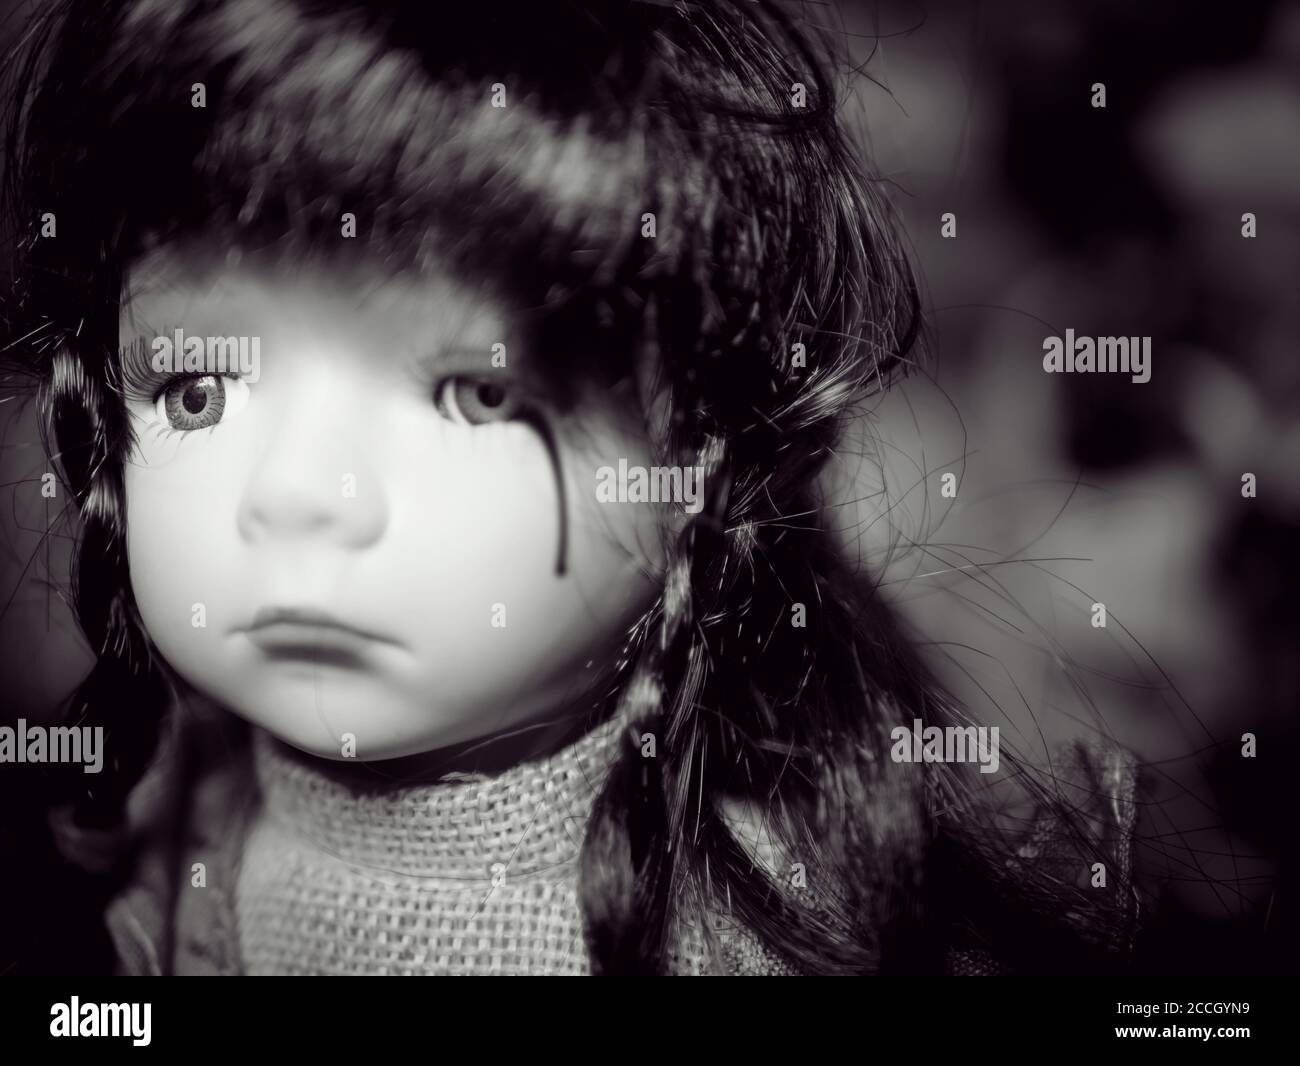 Doll with tear -Fotos und -Bildmaterial in hoher Auflösung – Alamy